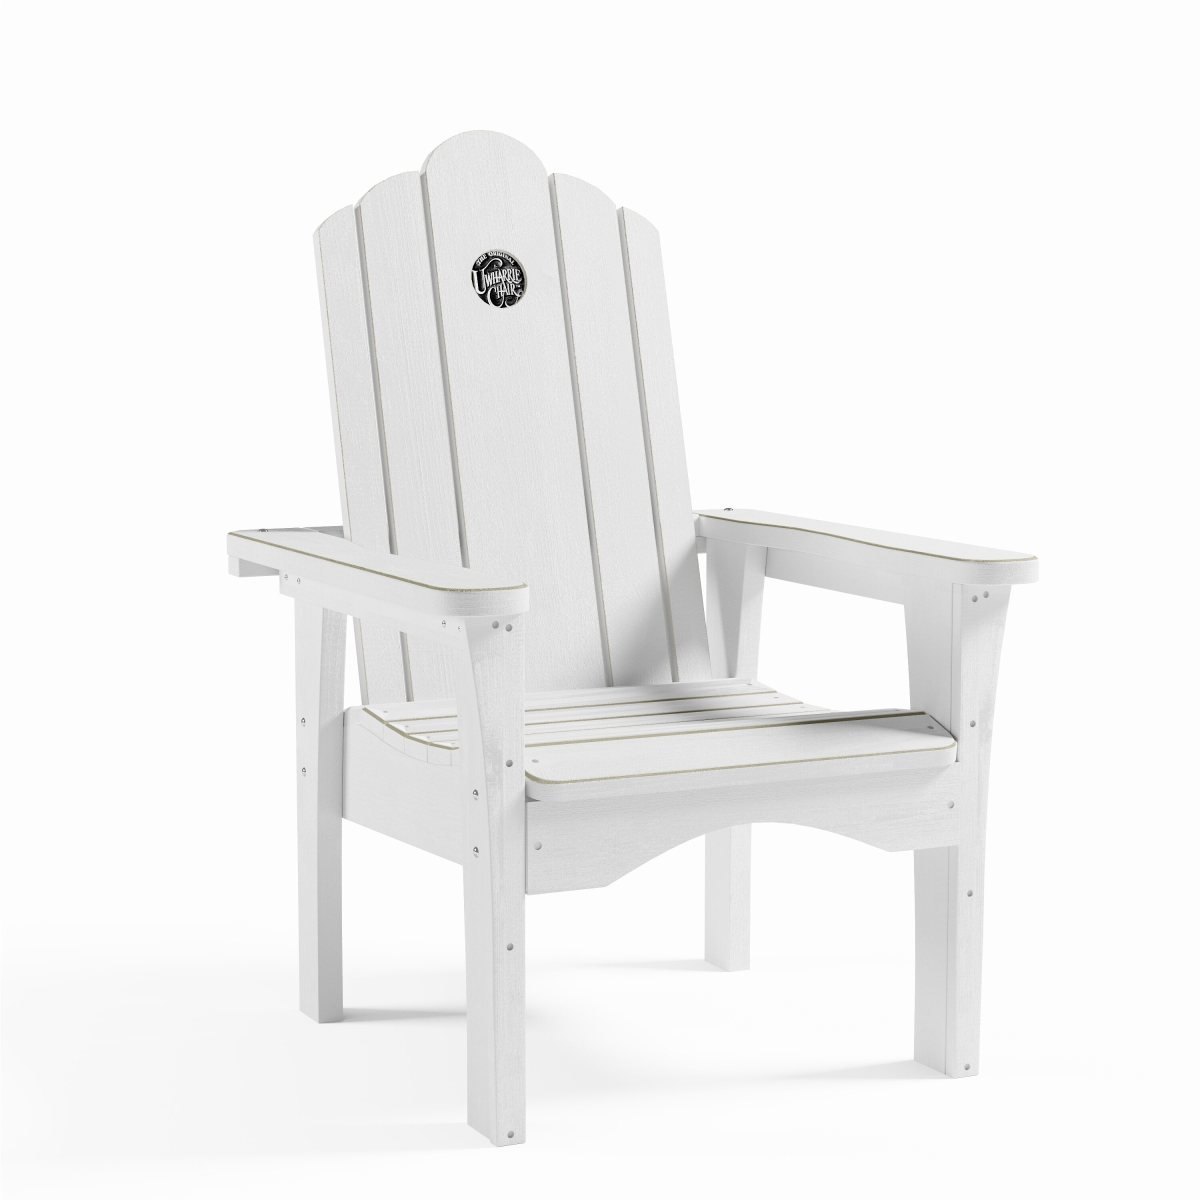 S114-014 Original Wood Lounge Chair, Whitewash Pine - 30.5 X 33.5 X 43.5 In.